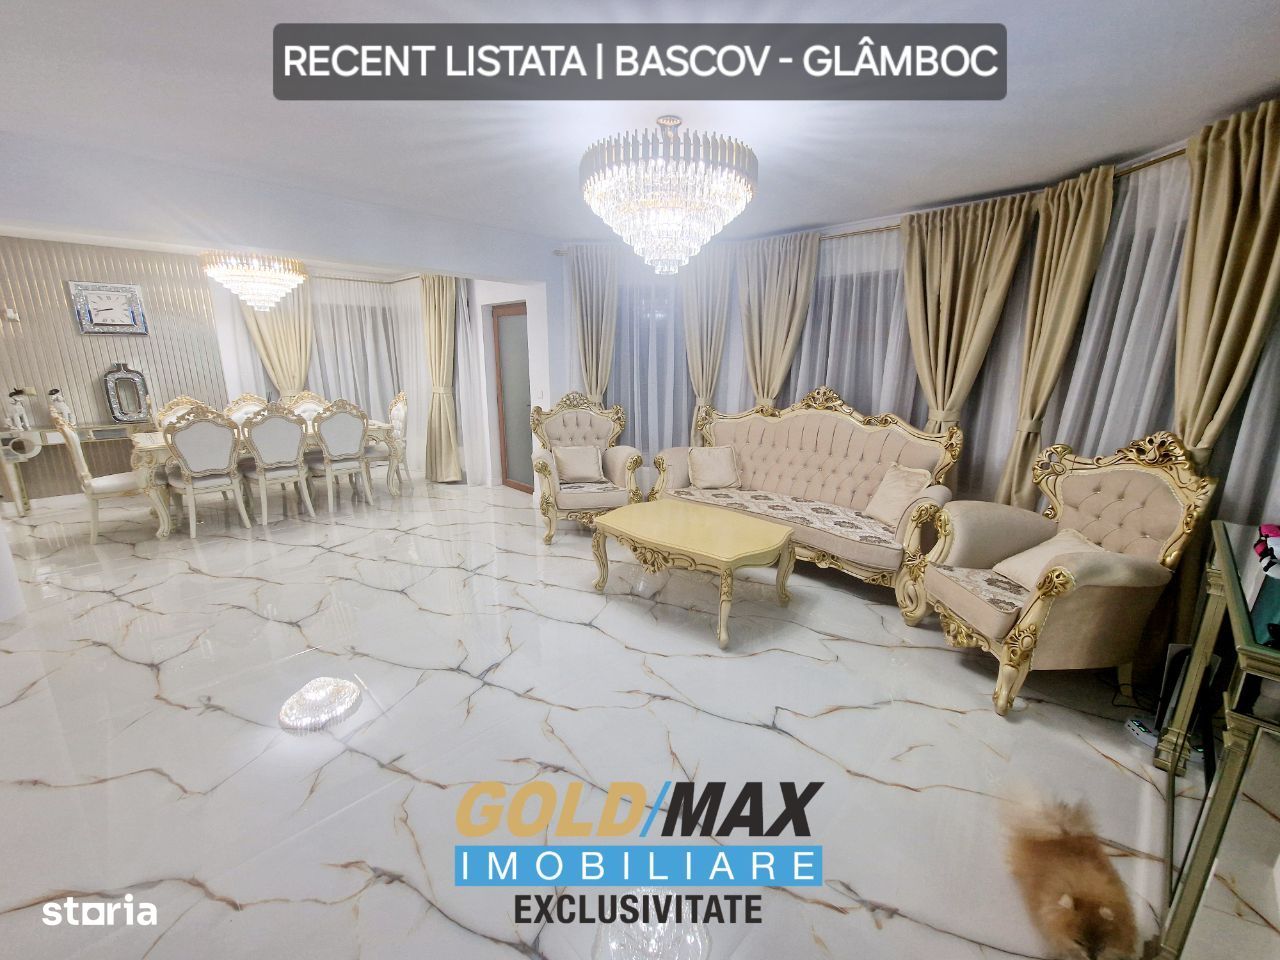 Vila moderna | Bascov - Glamboc | Exclusivitate | goldmax.ro